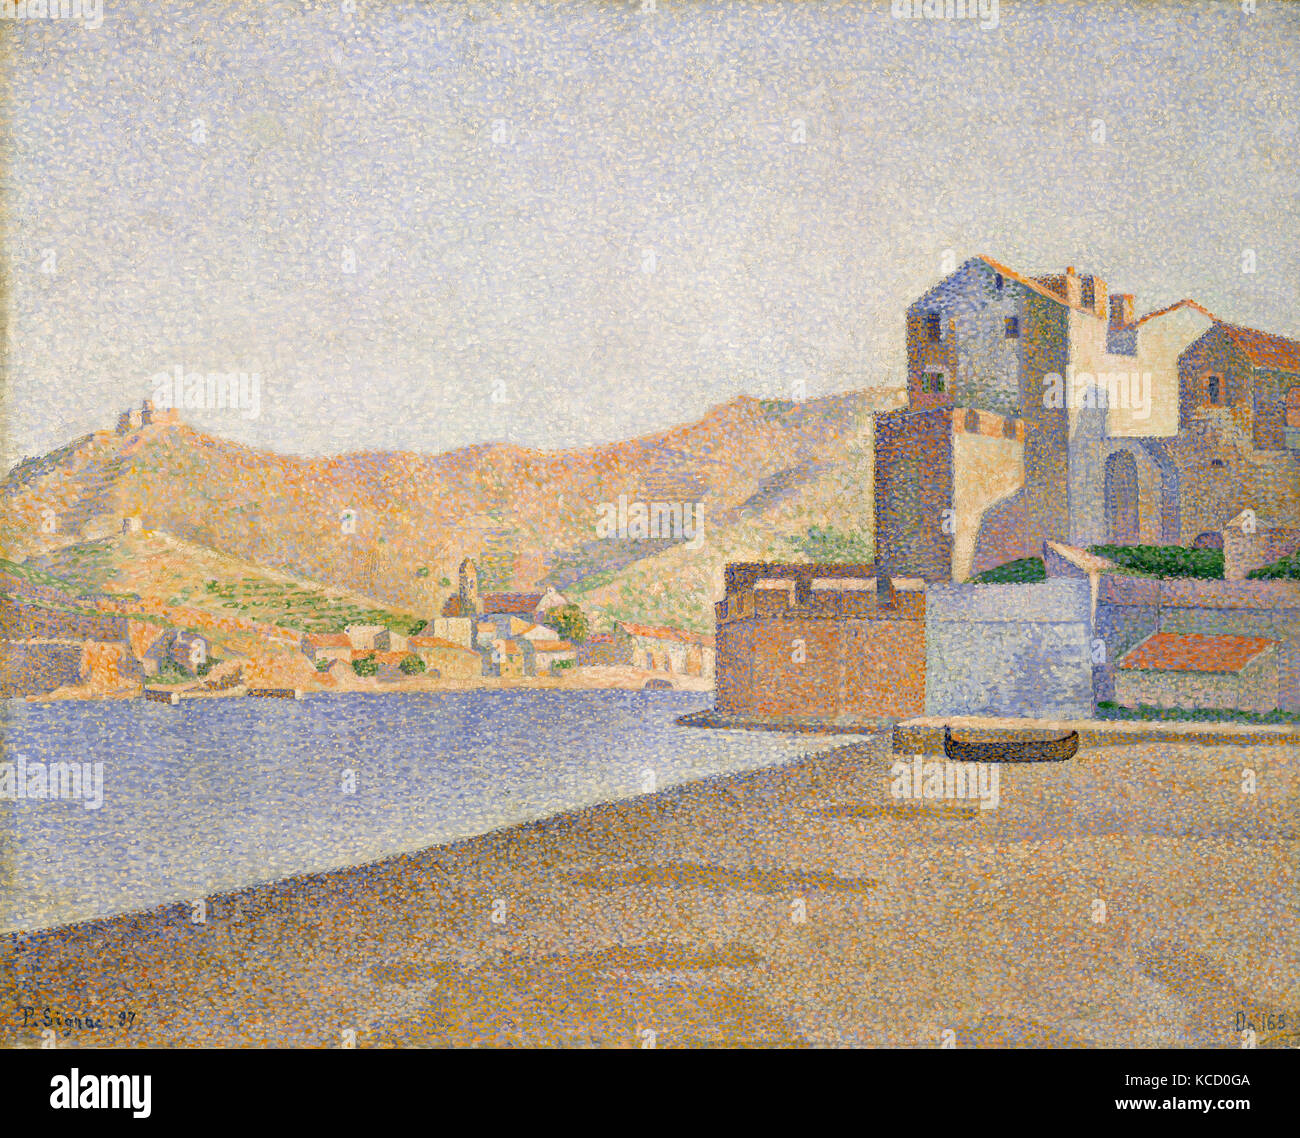 The Town Beach, Collioure, Opus 165 (Collioure. La Plage de la ville. Opus 165), Paul Signac, 1887 Stock Photo